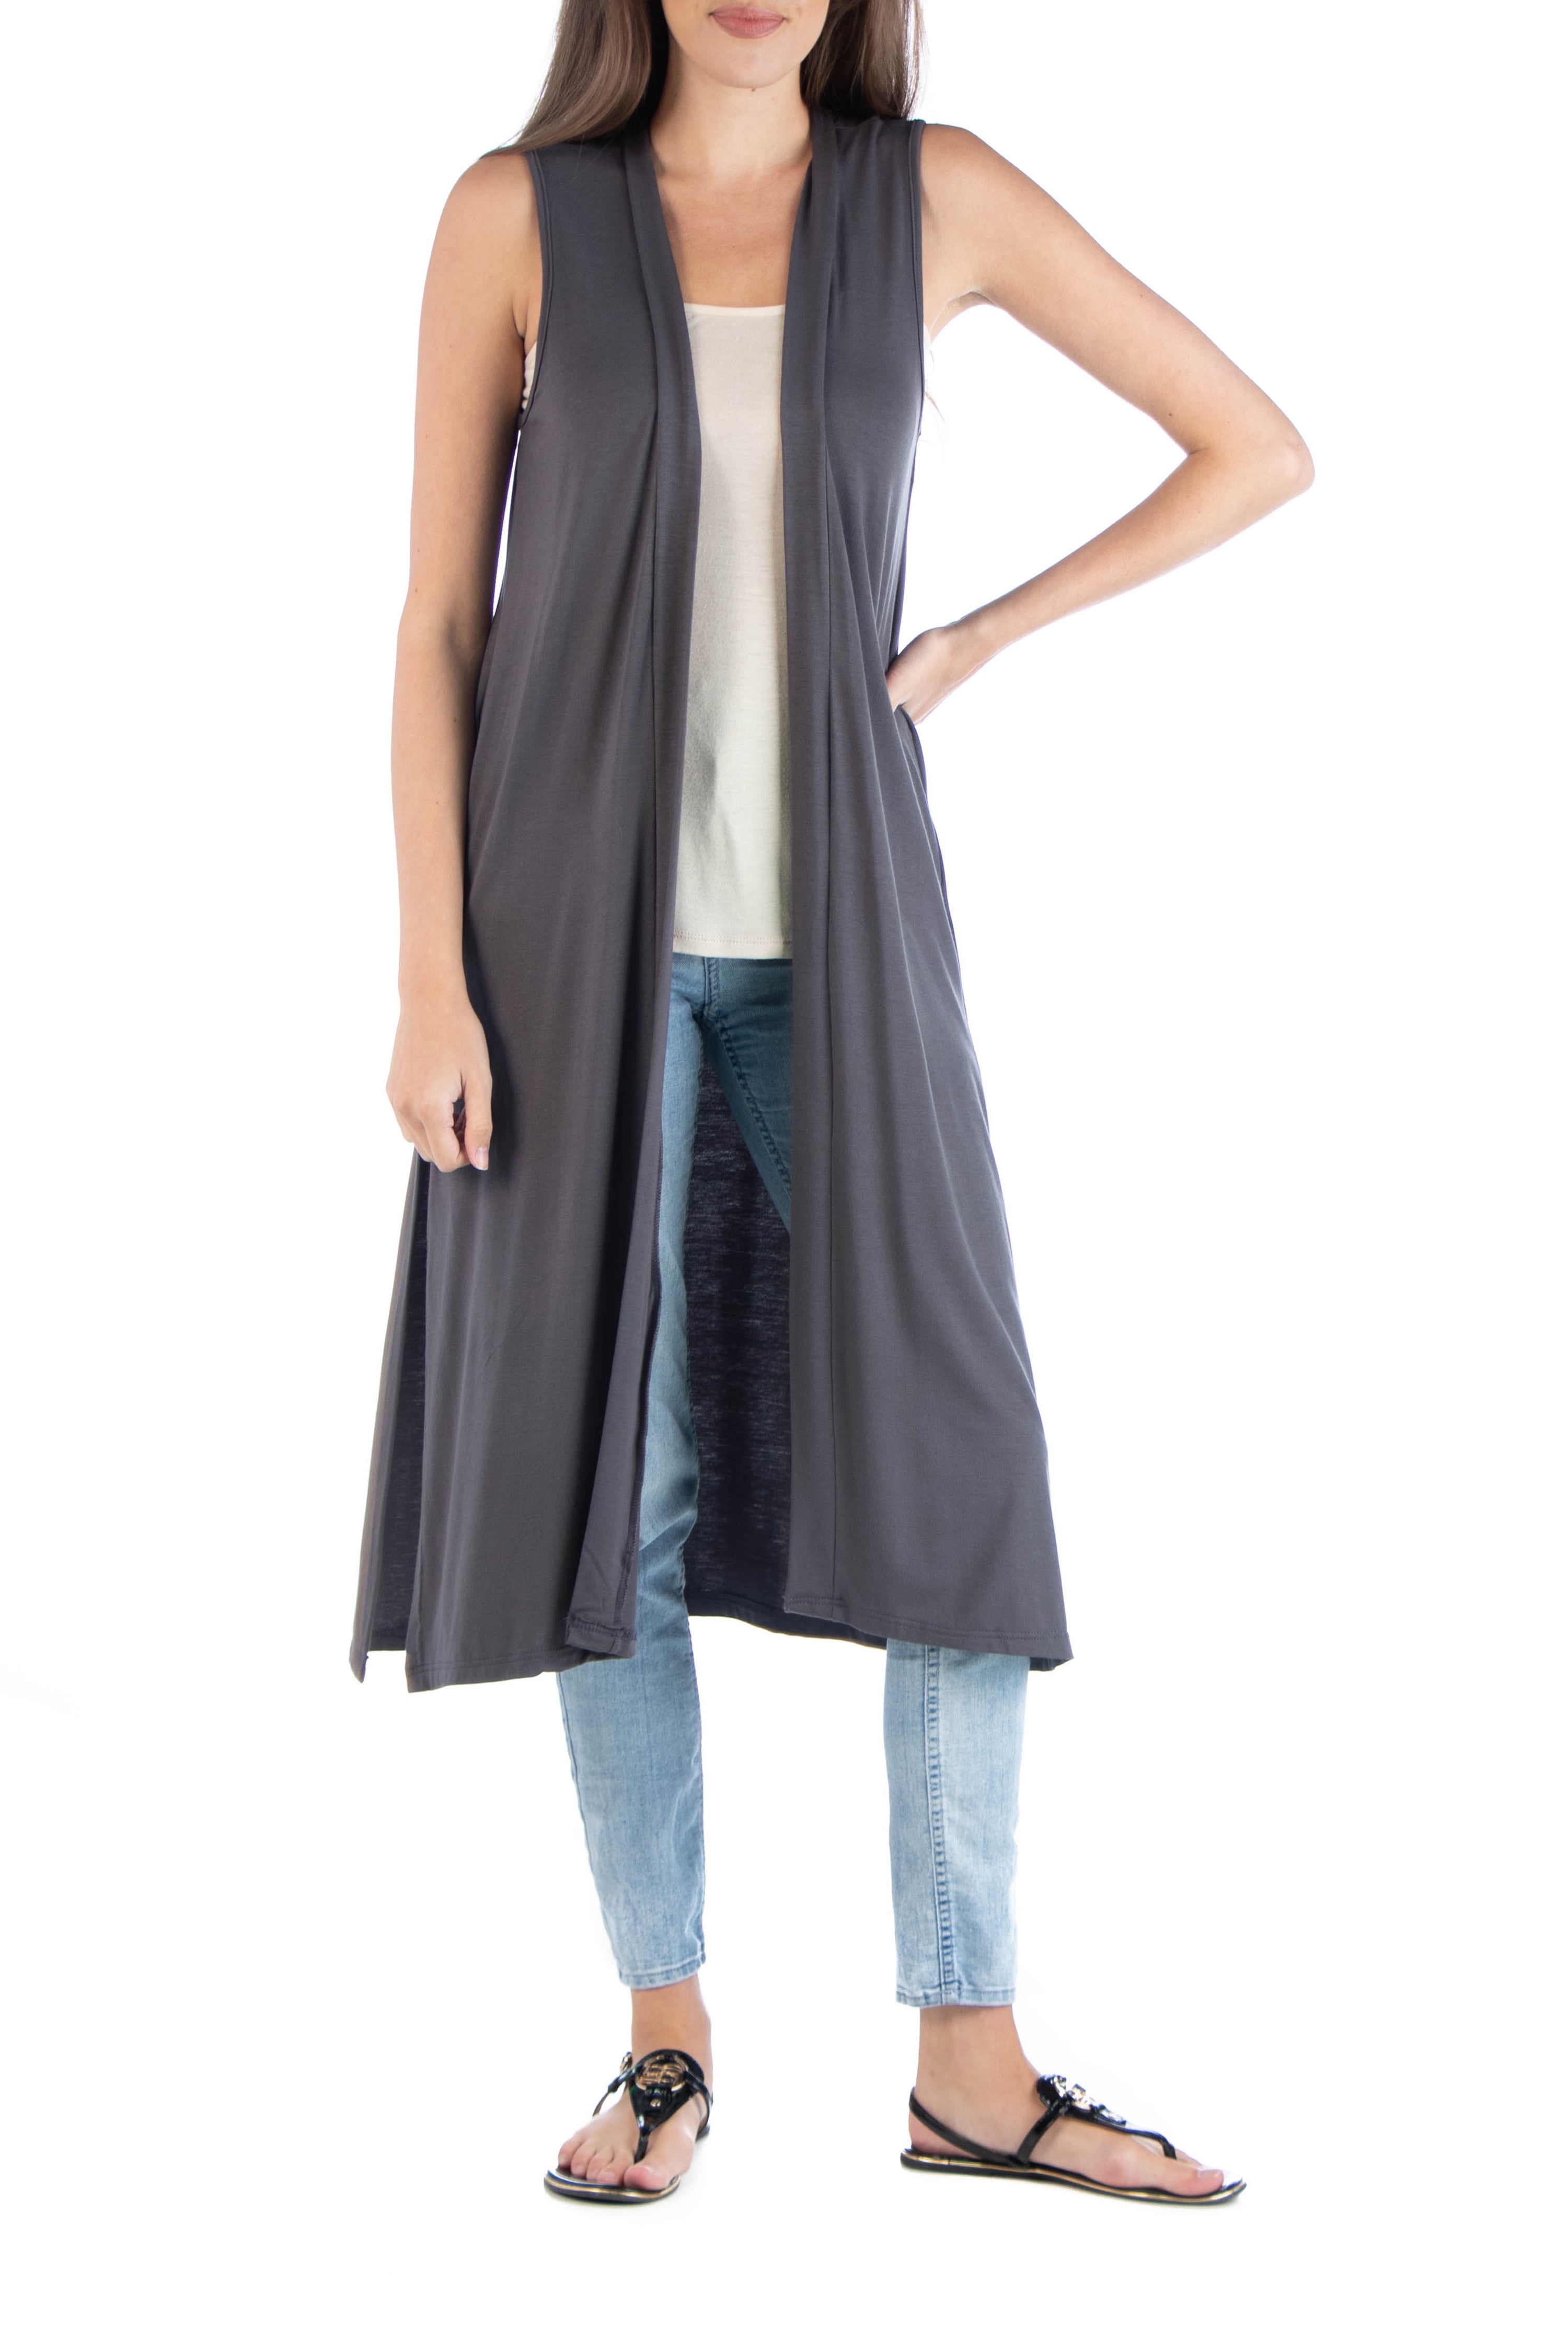 24/7 Comfort Apparel Women's Sleeveless Long Cardigan Vest with Side Slit 